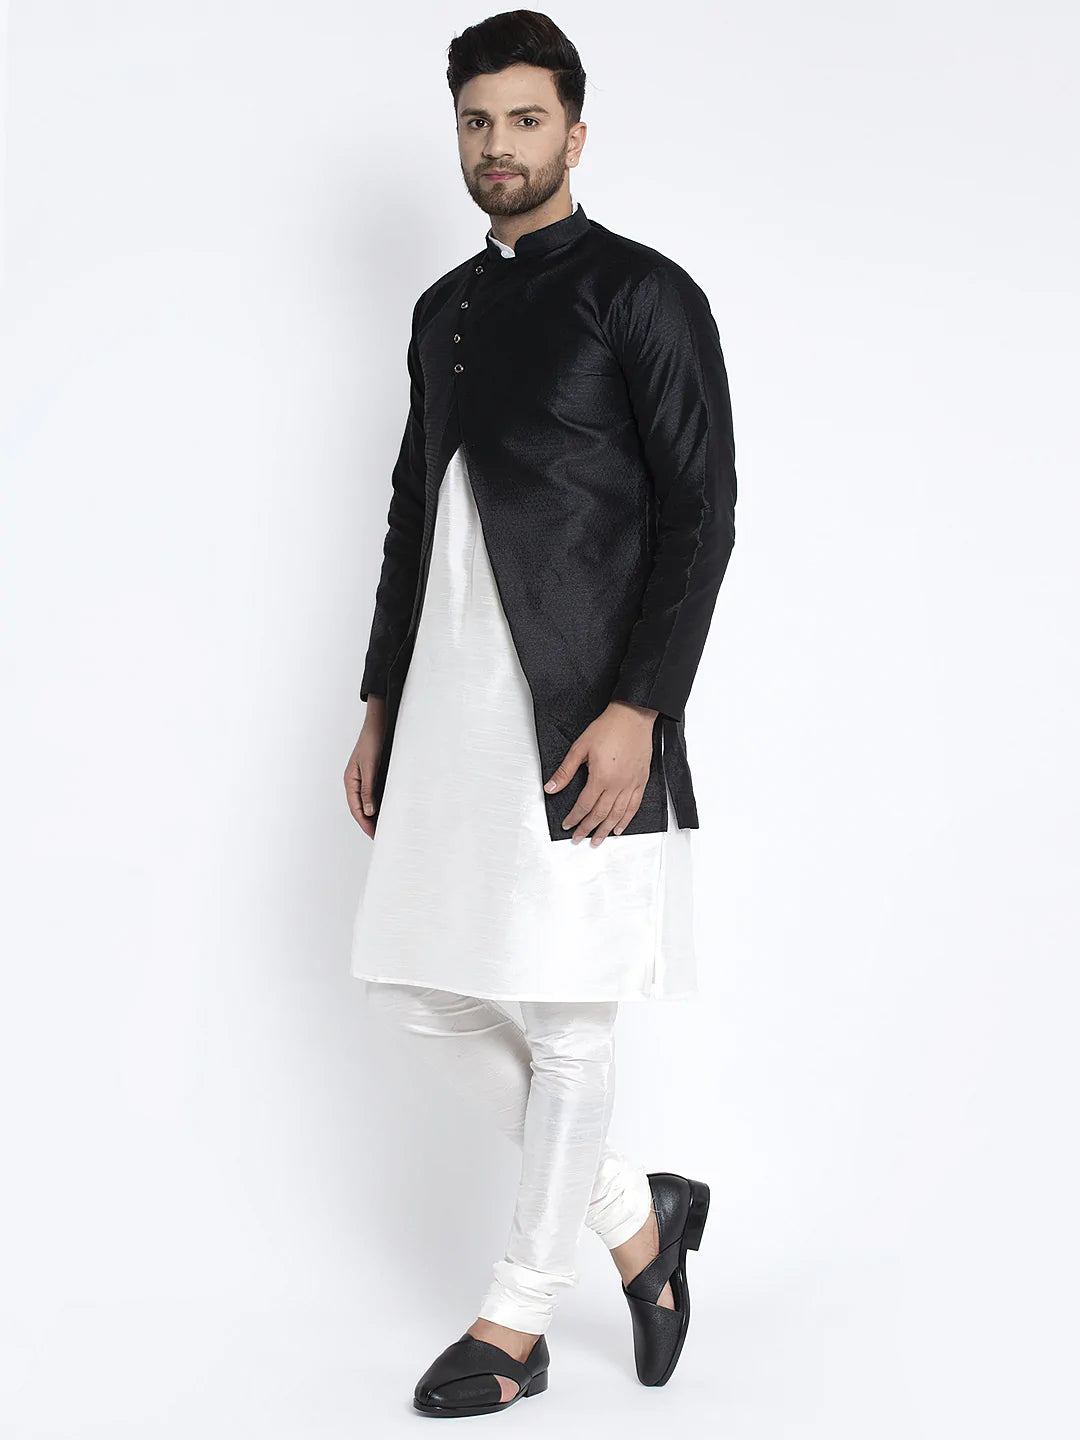 Off White Linen Readymade Kurta Pajama With Jacket 198225 | Jackets men  fashion, White kurta, Nehru jacket for men